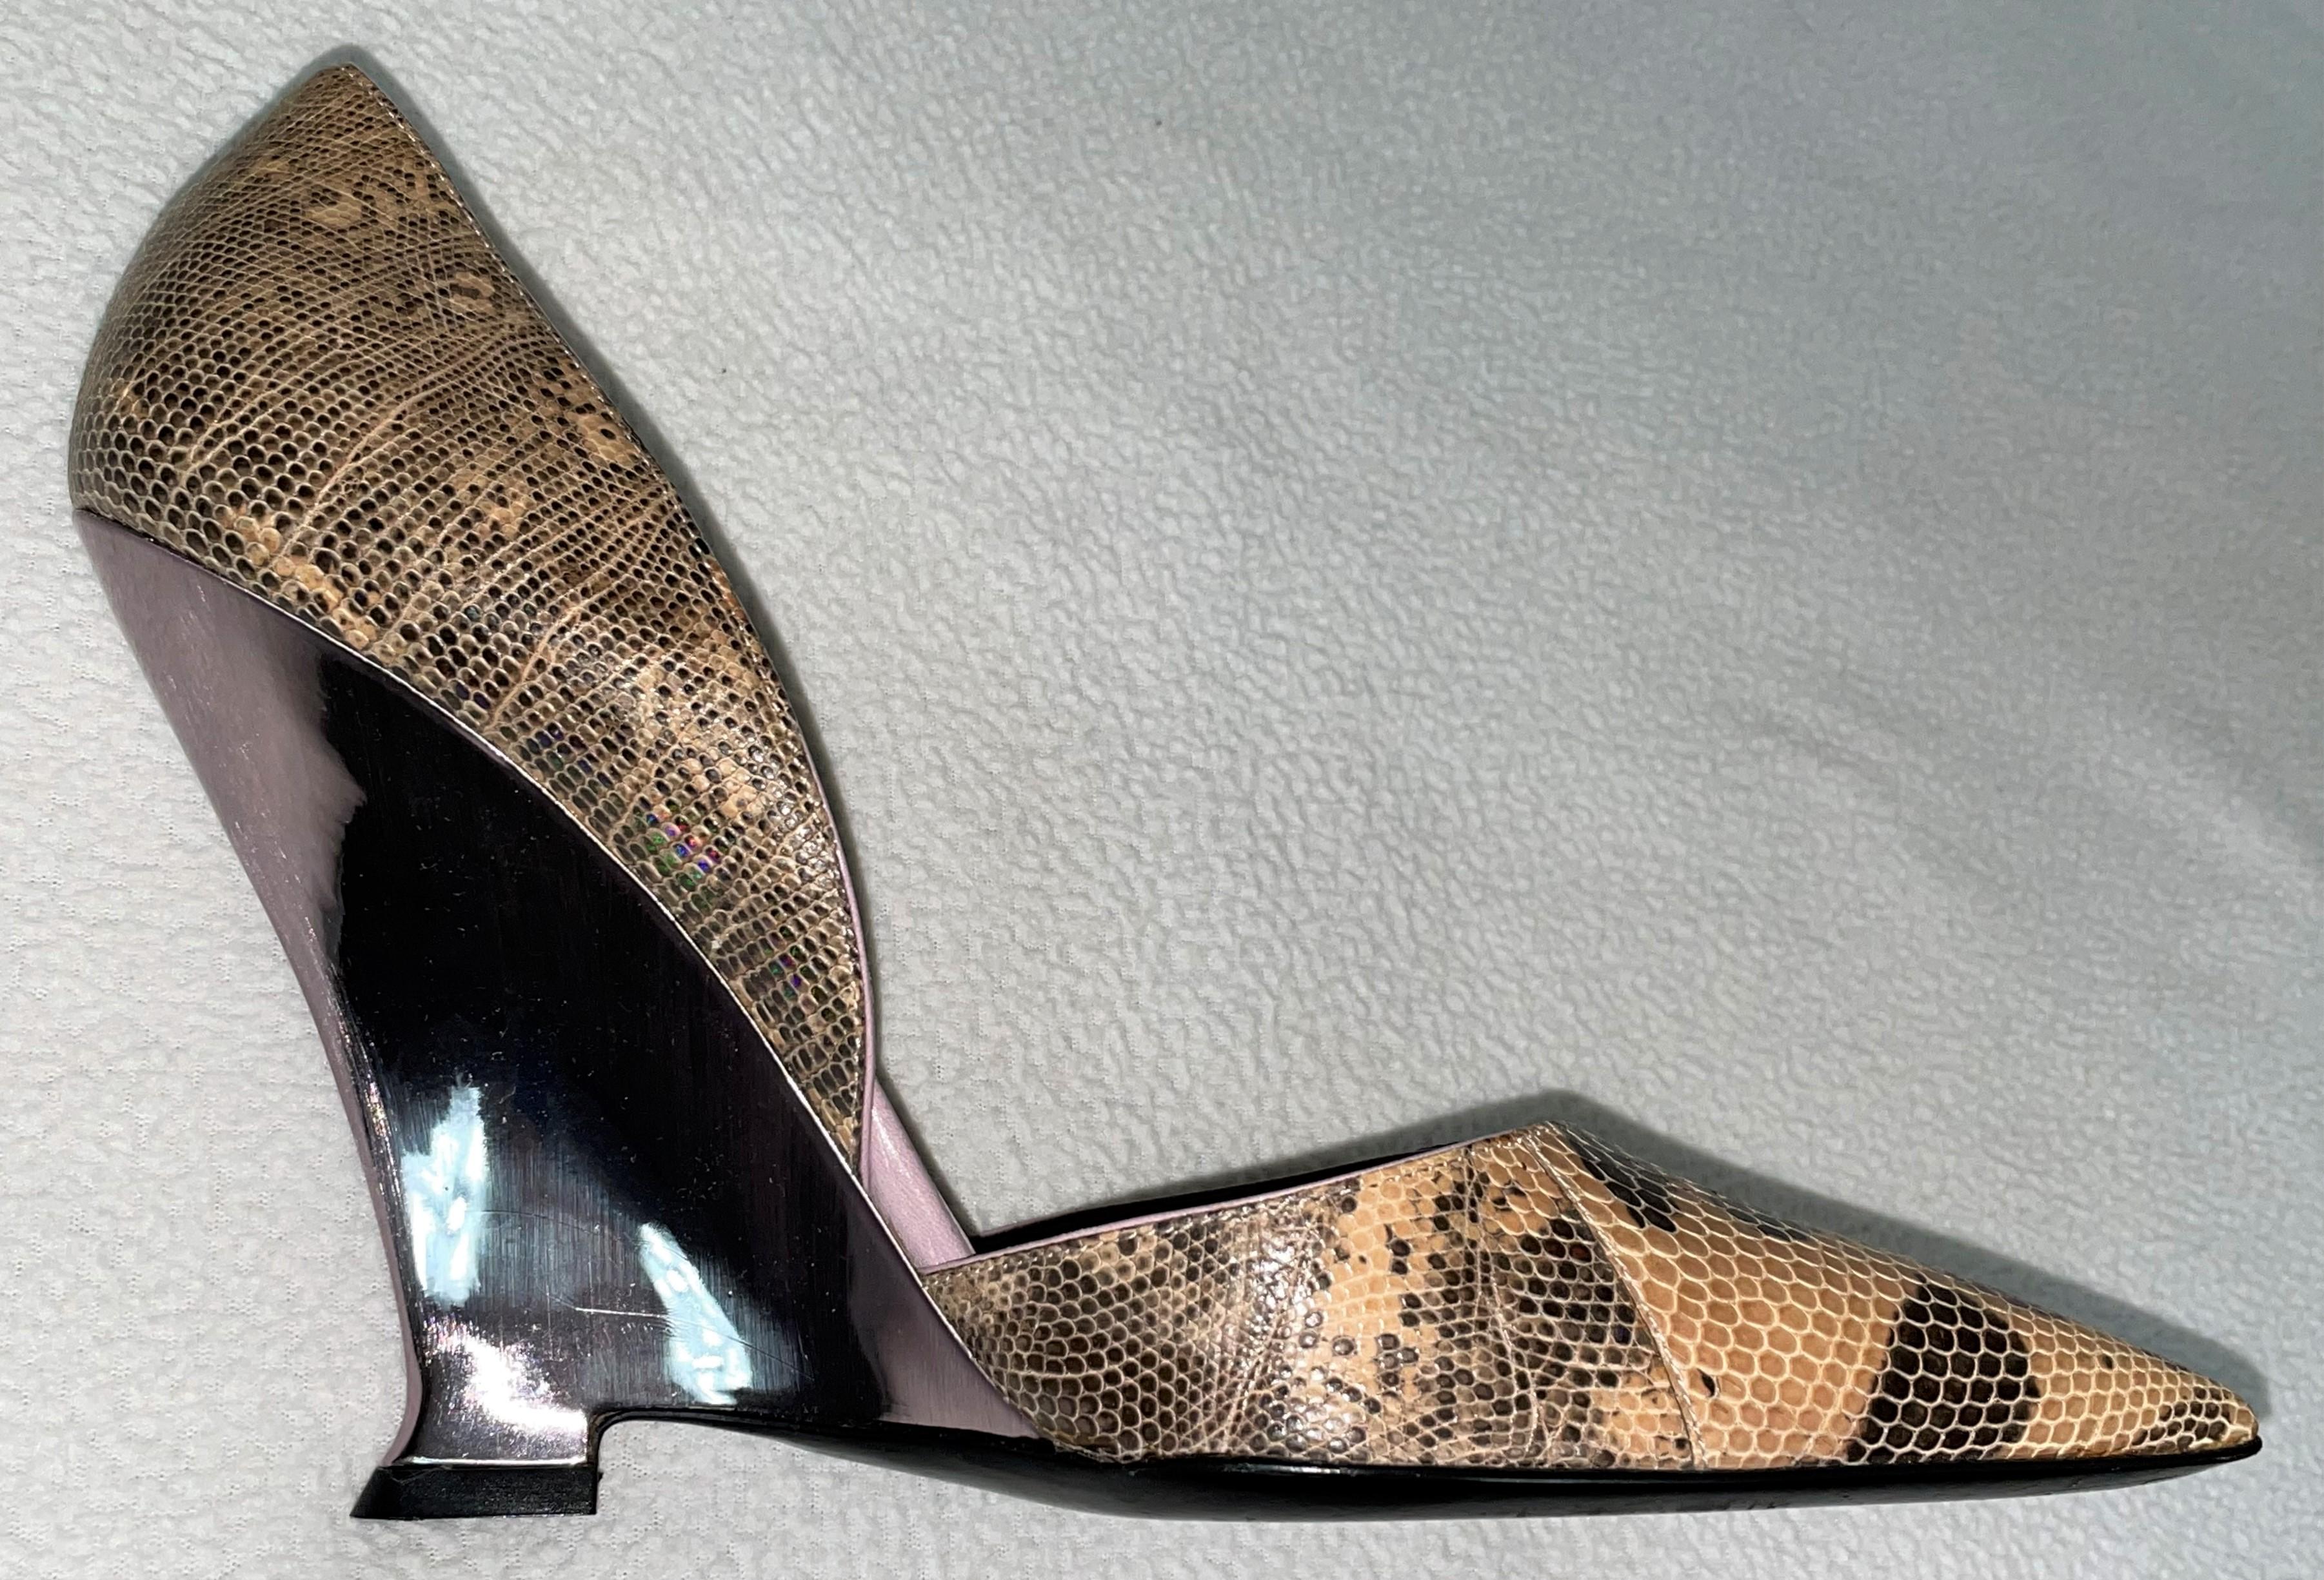 tom ford lizard heels